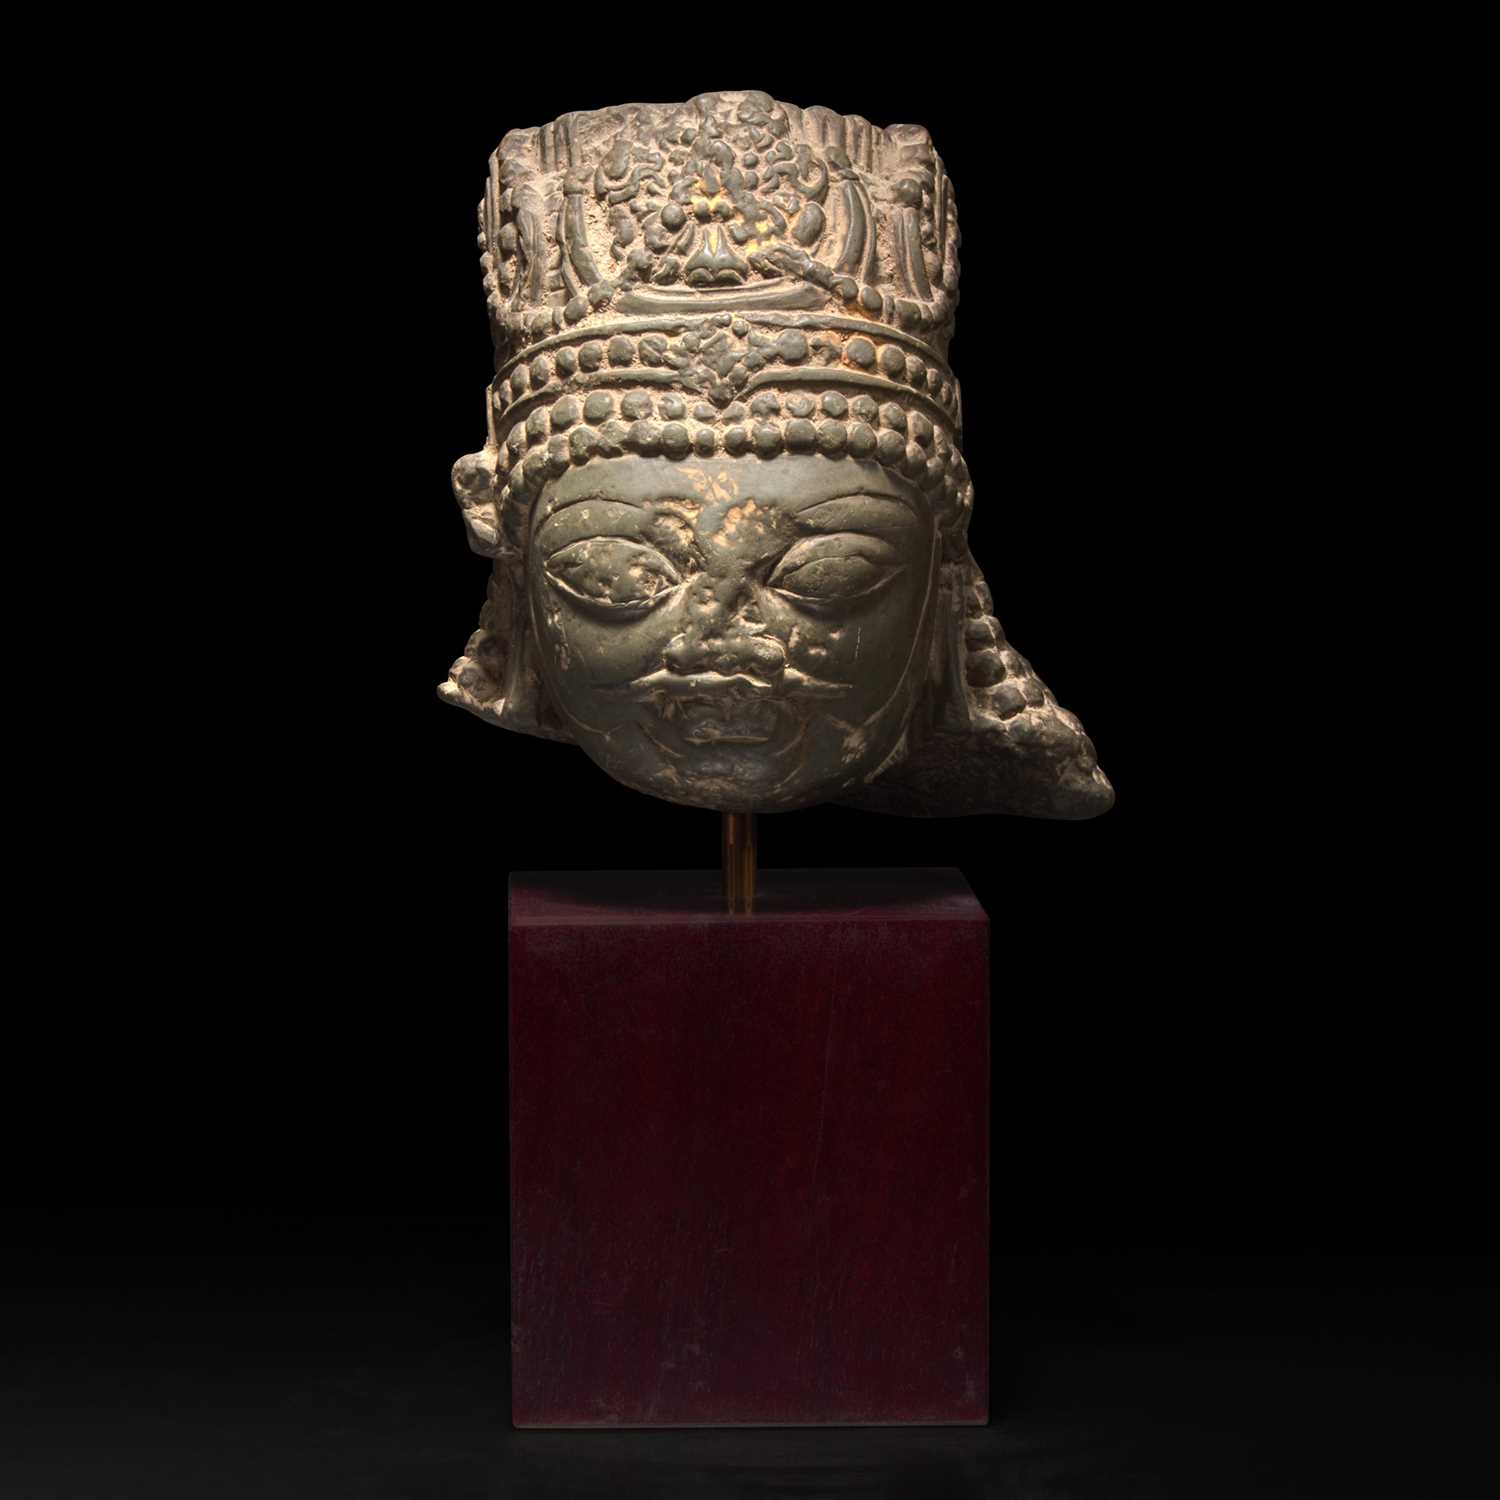 Lot 154 - A Kashmiri carved stone head of a crowned figure 印度石雕带冠头像